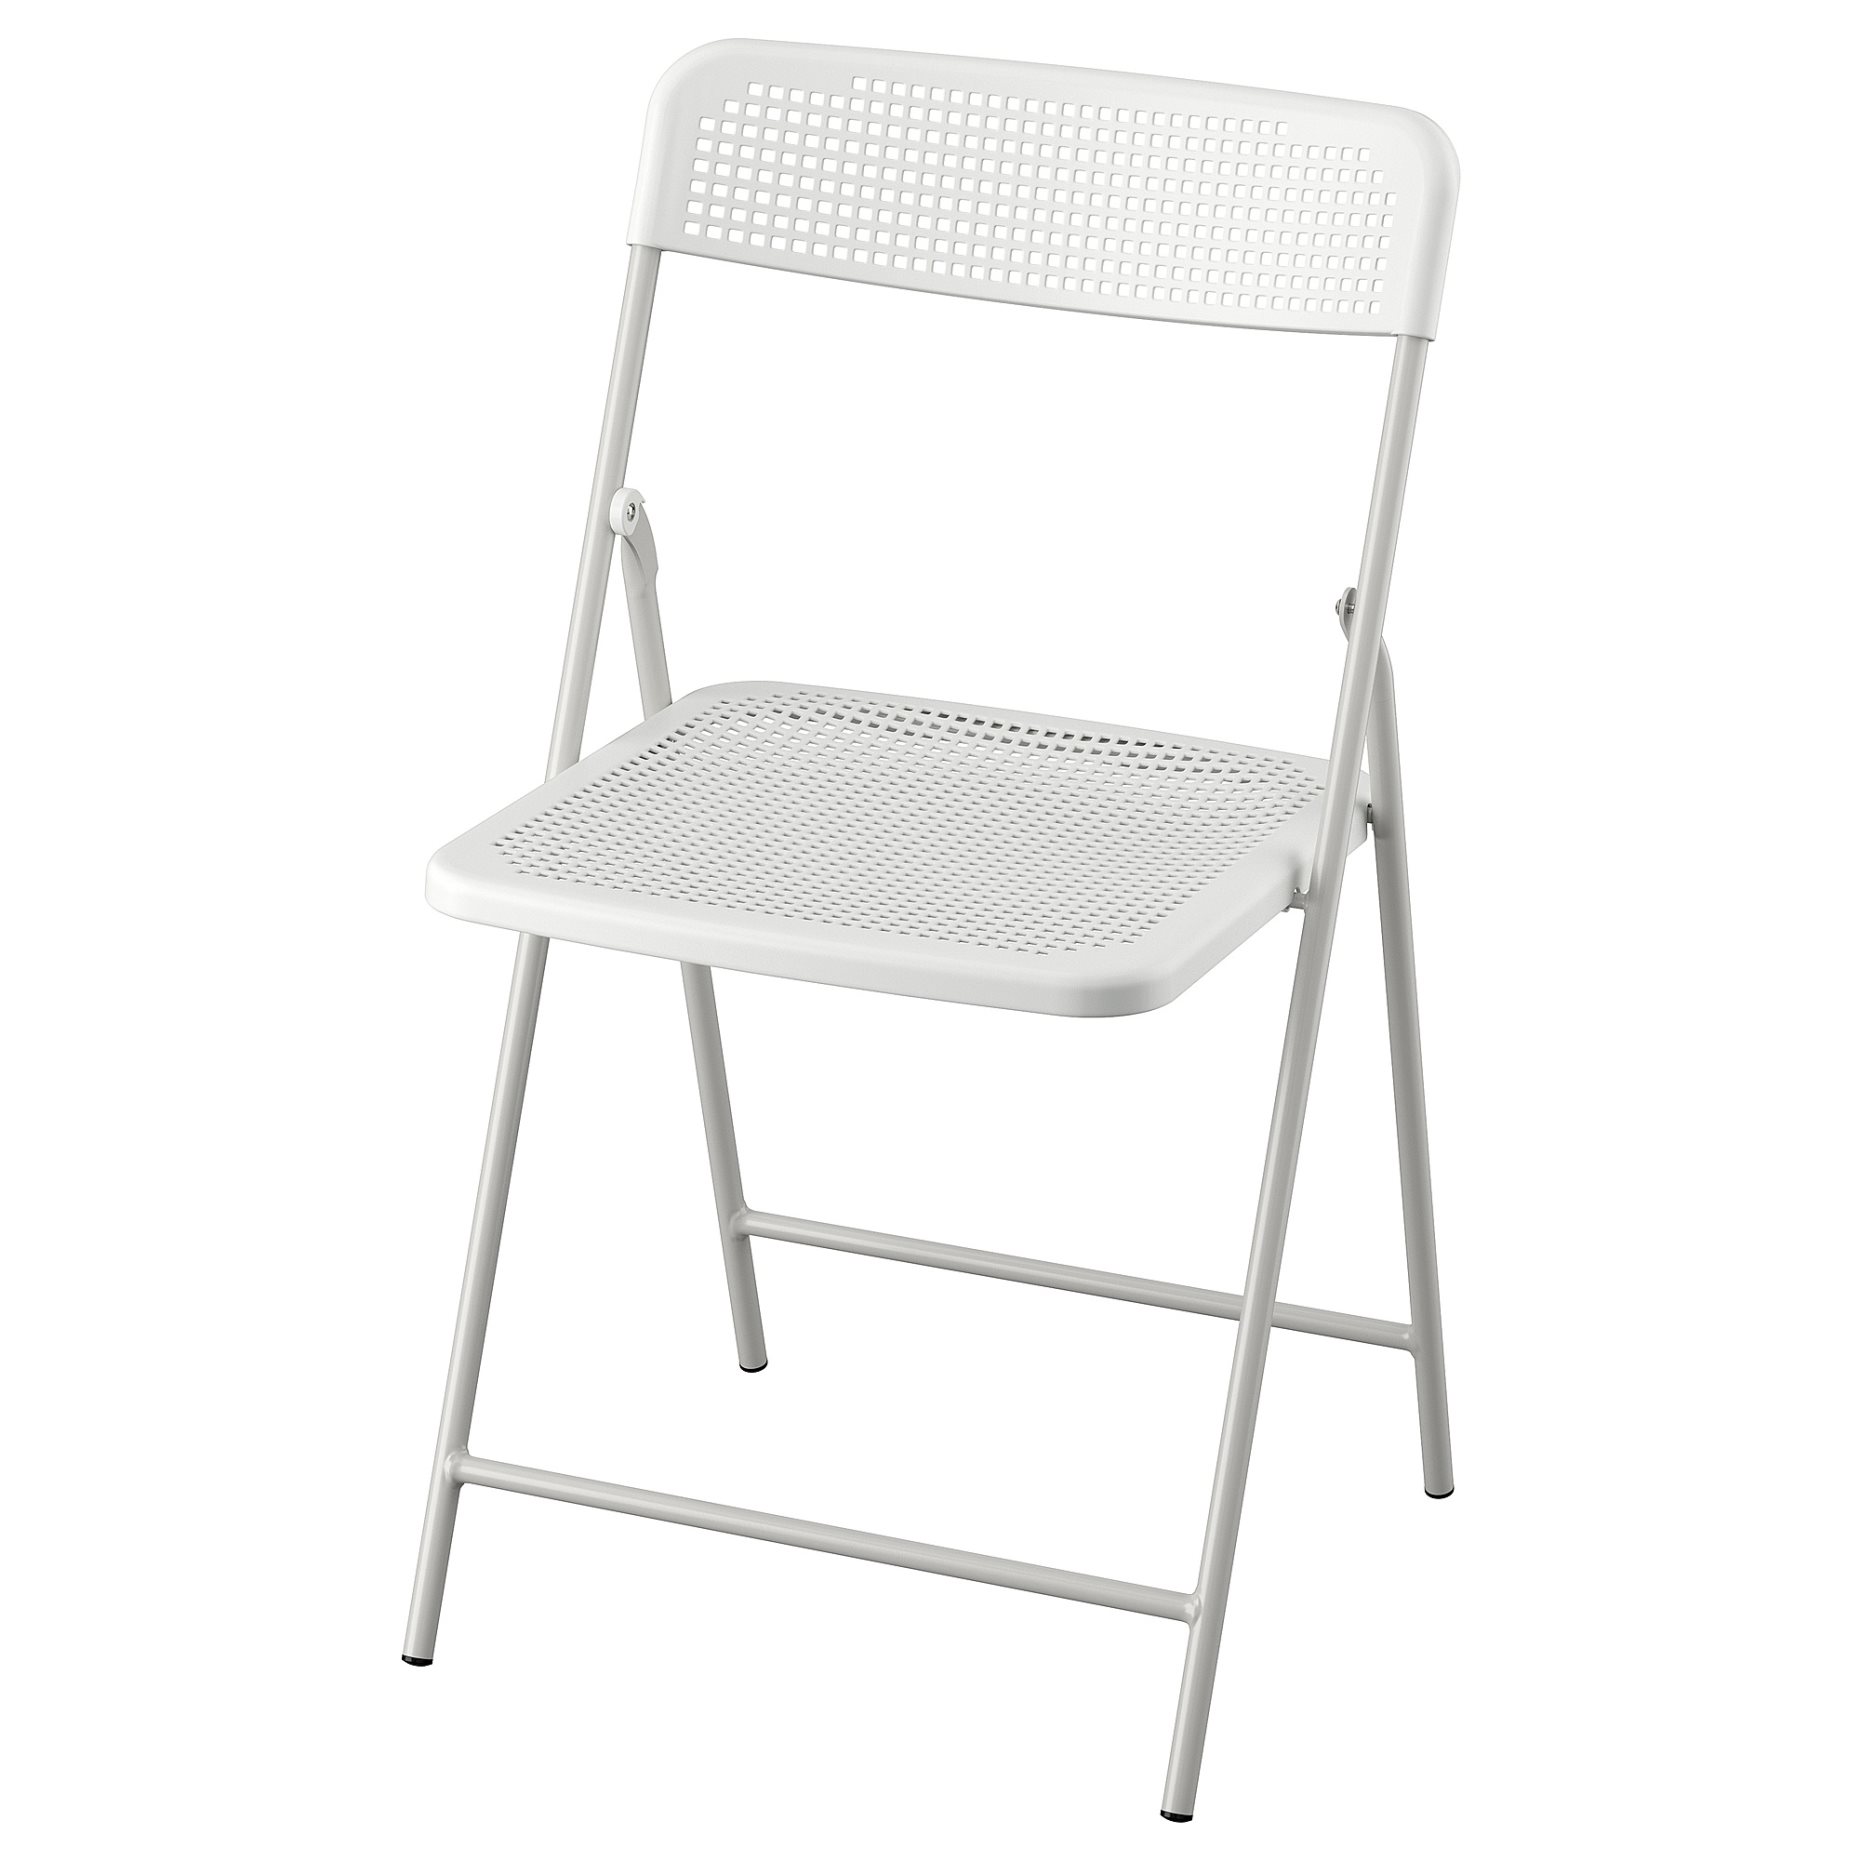 TORPARÖ, стол, употреба на открито/закрито, сгъваем, 005.378.50